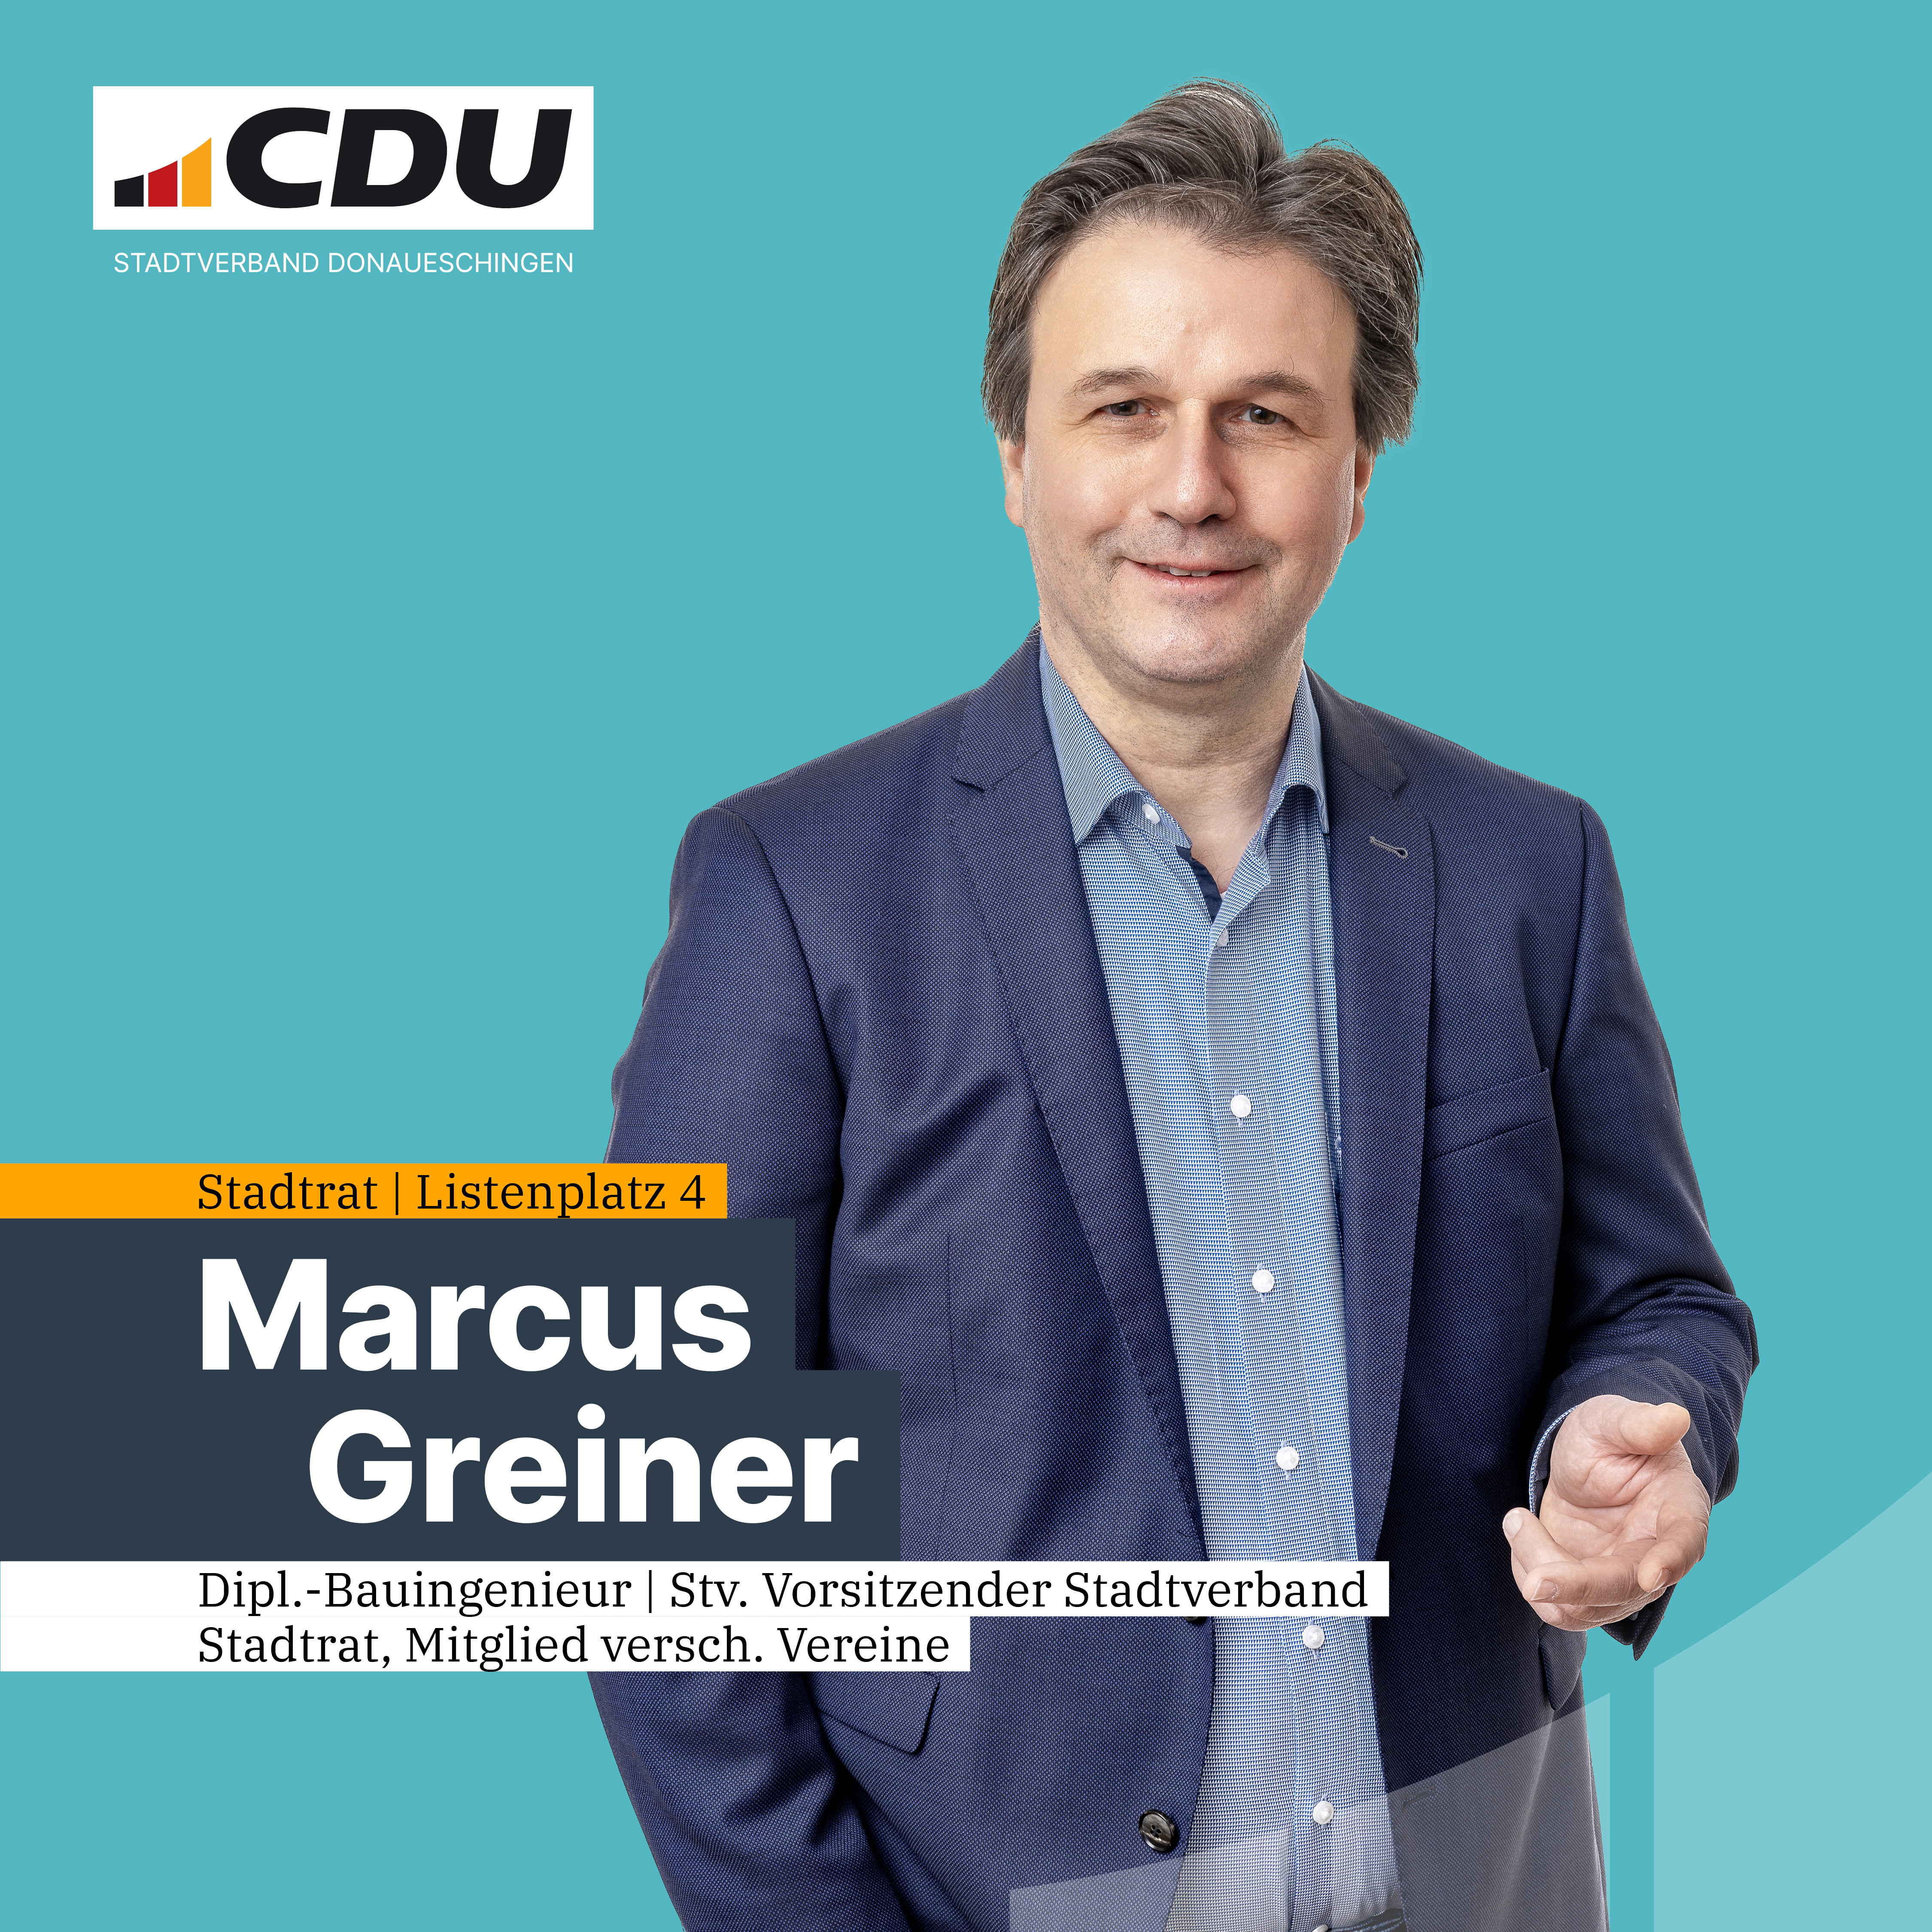  Marcus Greiner